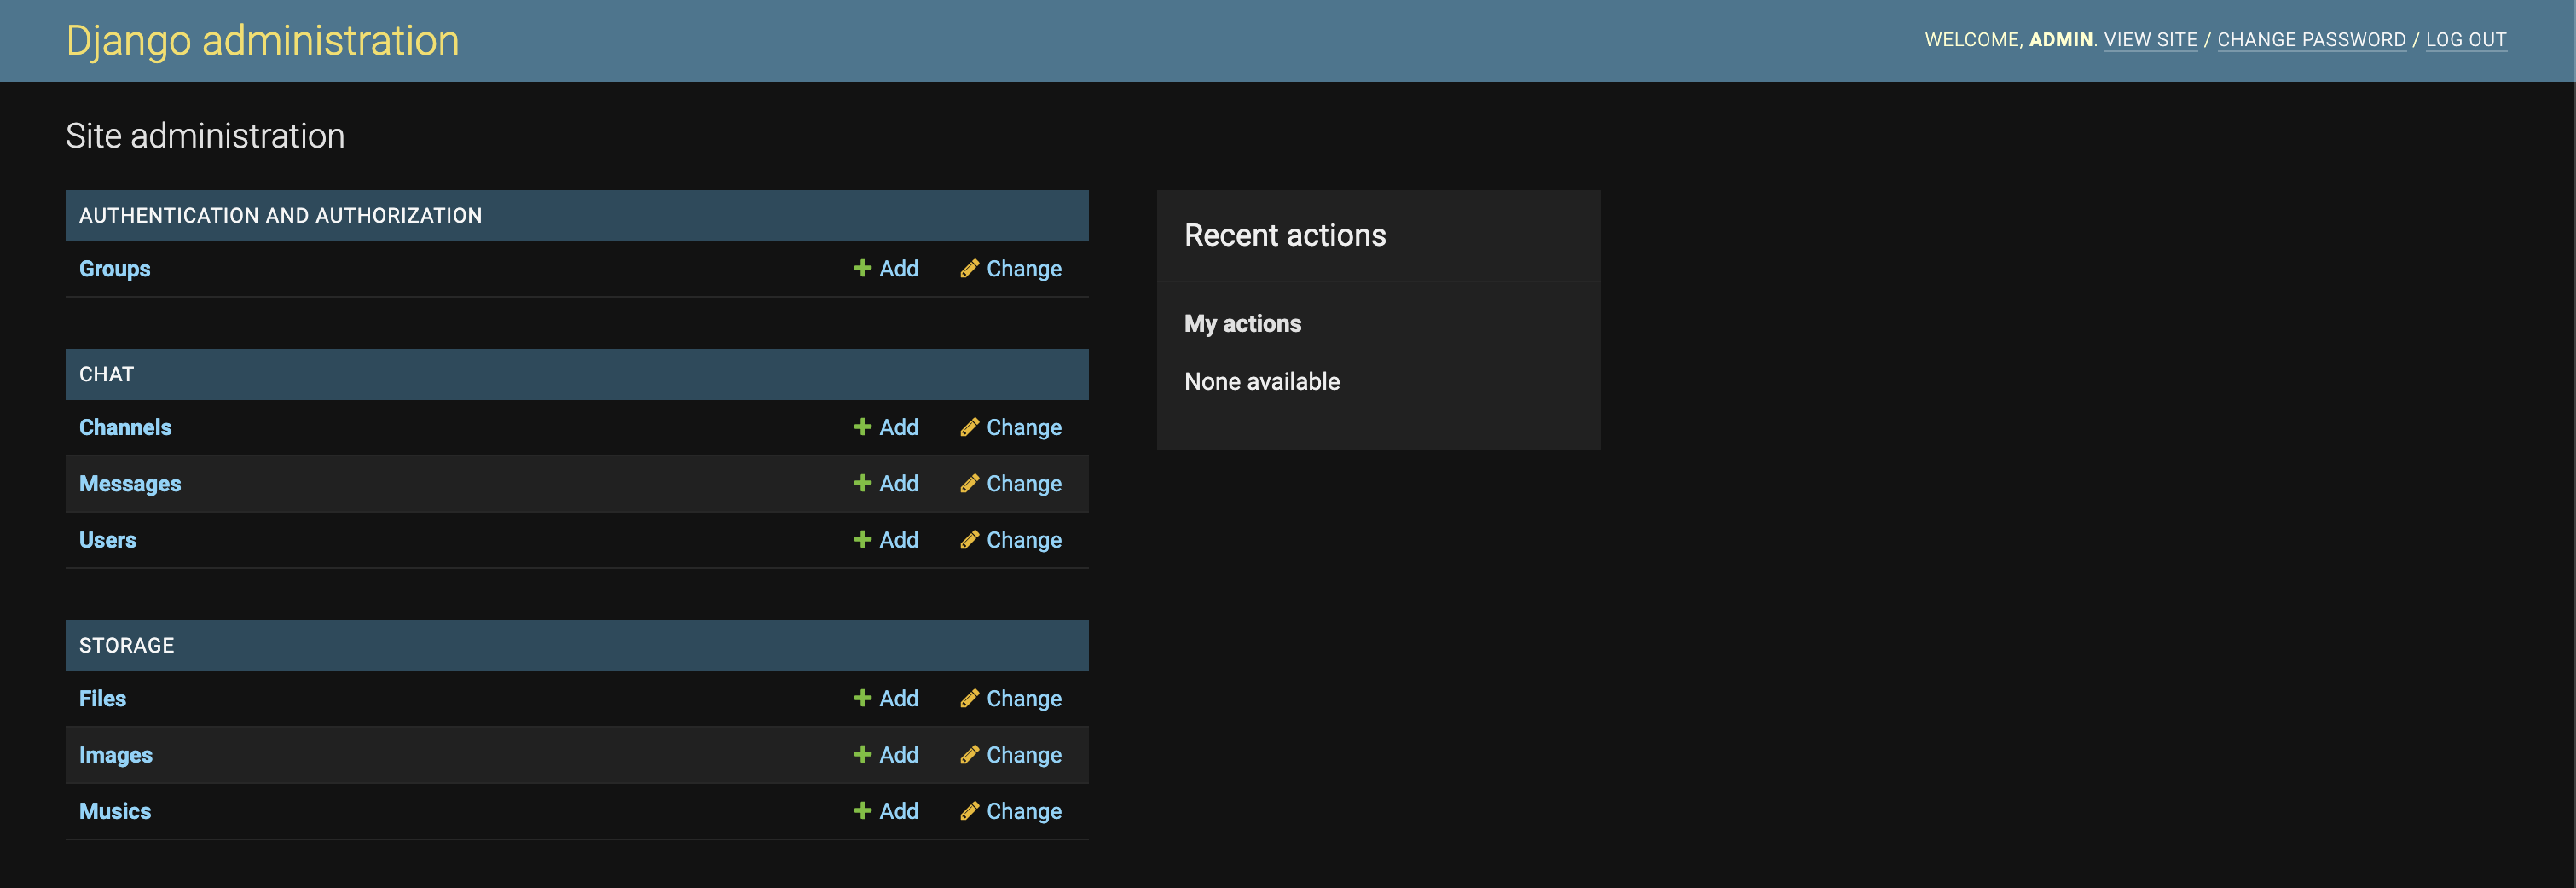 Django administrative panel screenshot